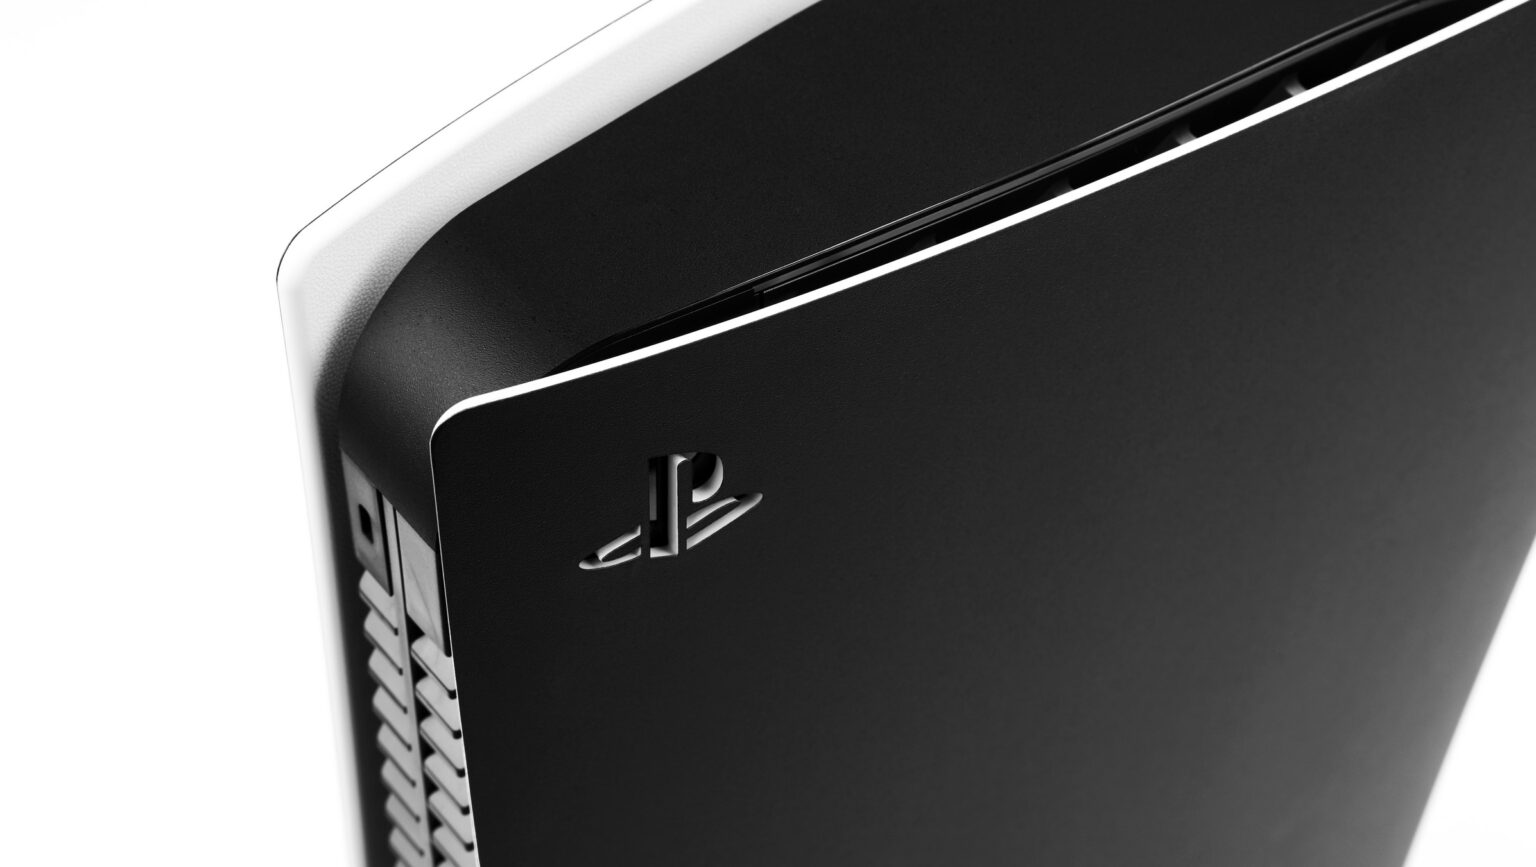 Zwarte Playstation 5 scoren? Bedrijf daagt Sony uit